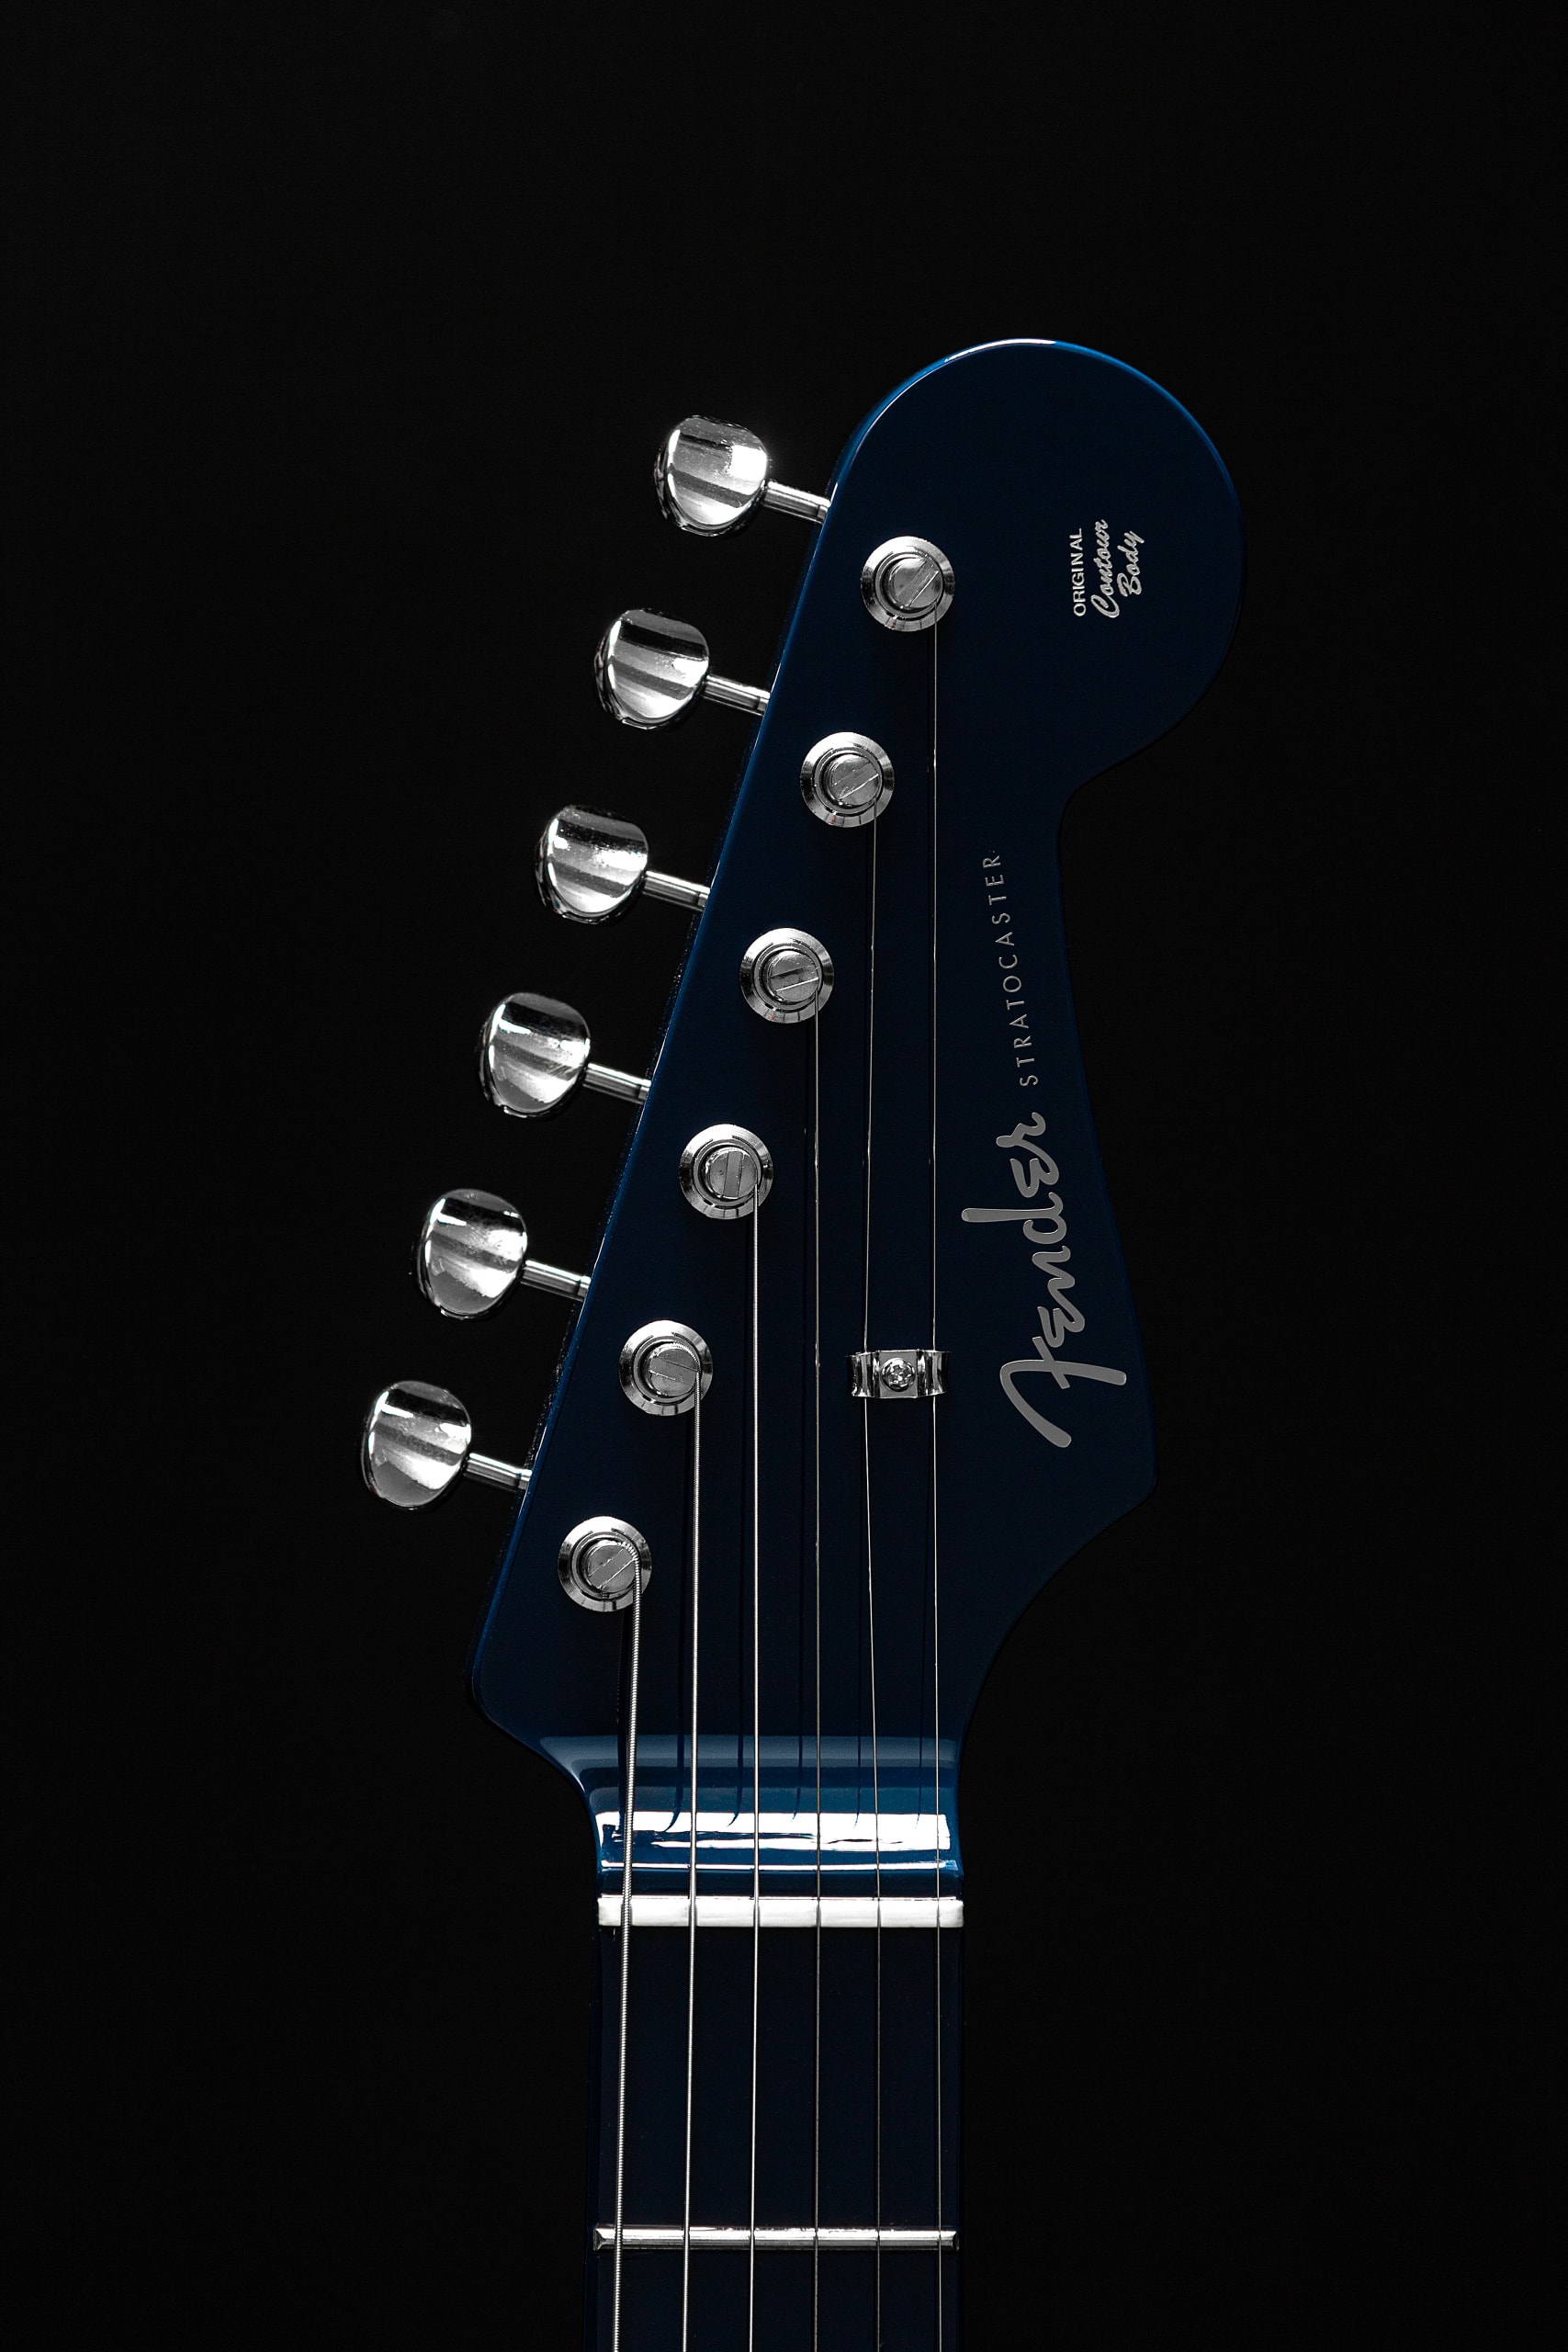 HYPEBEAST 攜手 Fender 推出聯名限量 Stratocaster 吉他